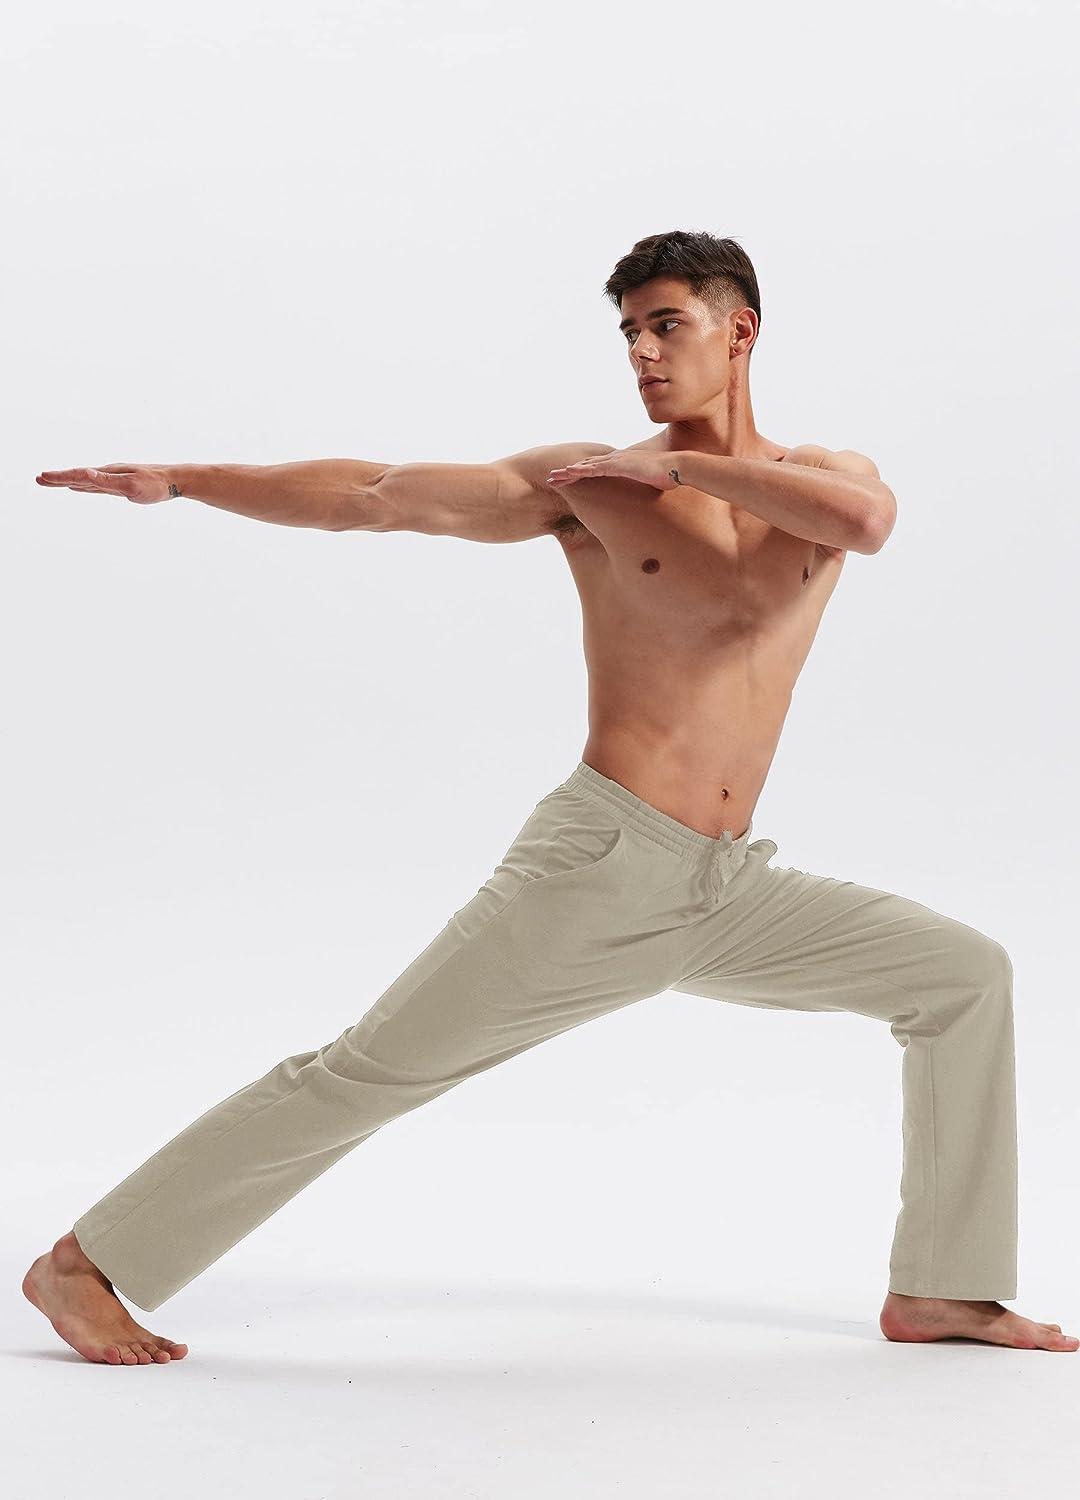 Willit Men's Cotton Yoga Sweatpants Exercise Pants Open Bottom